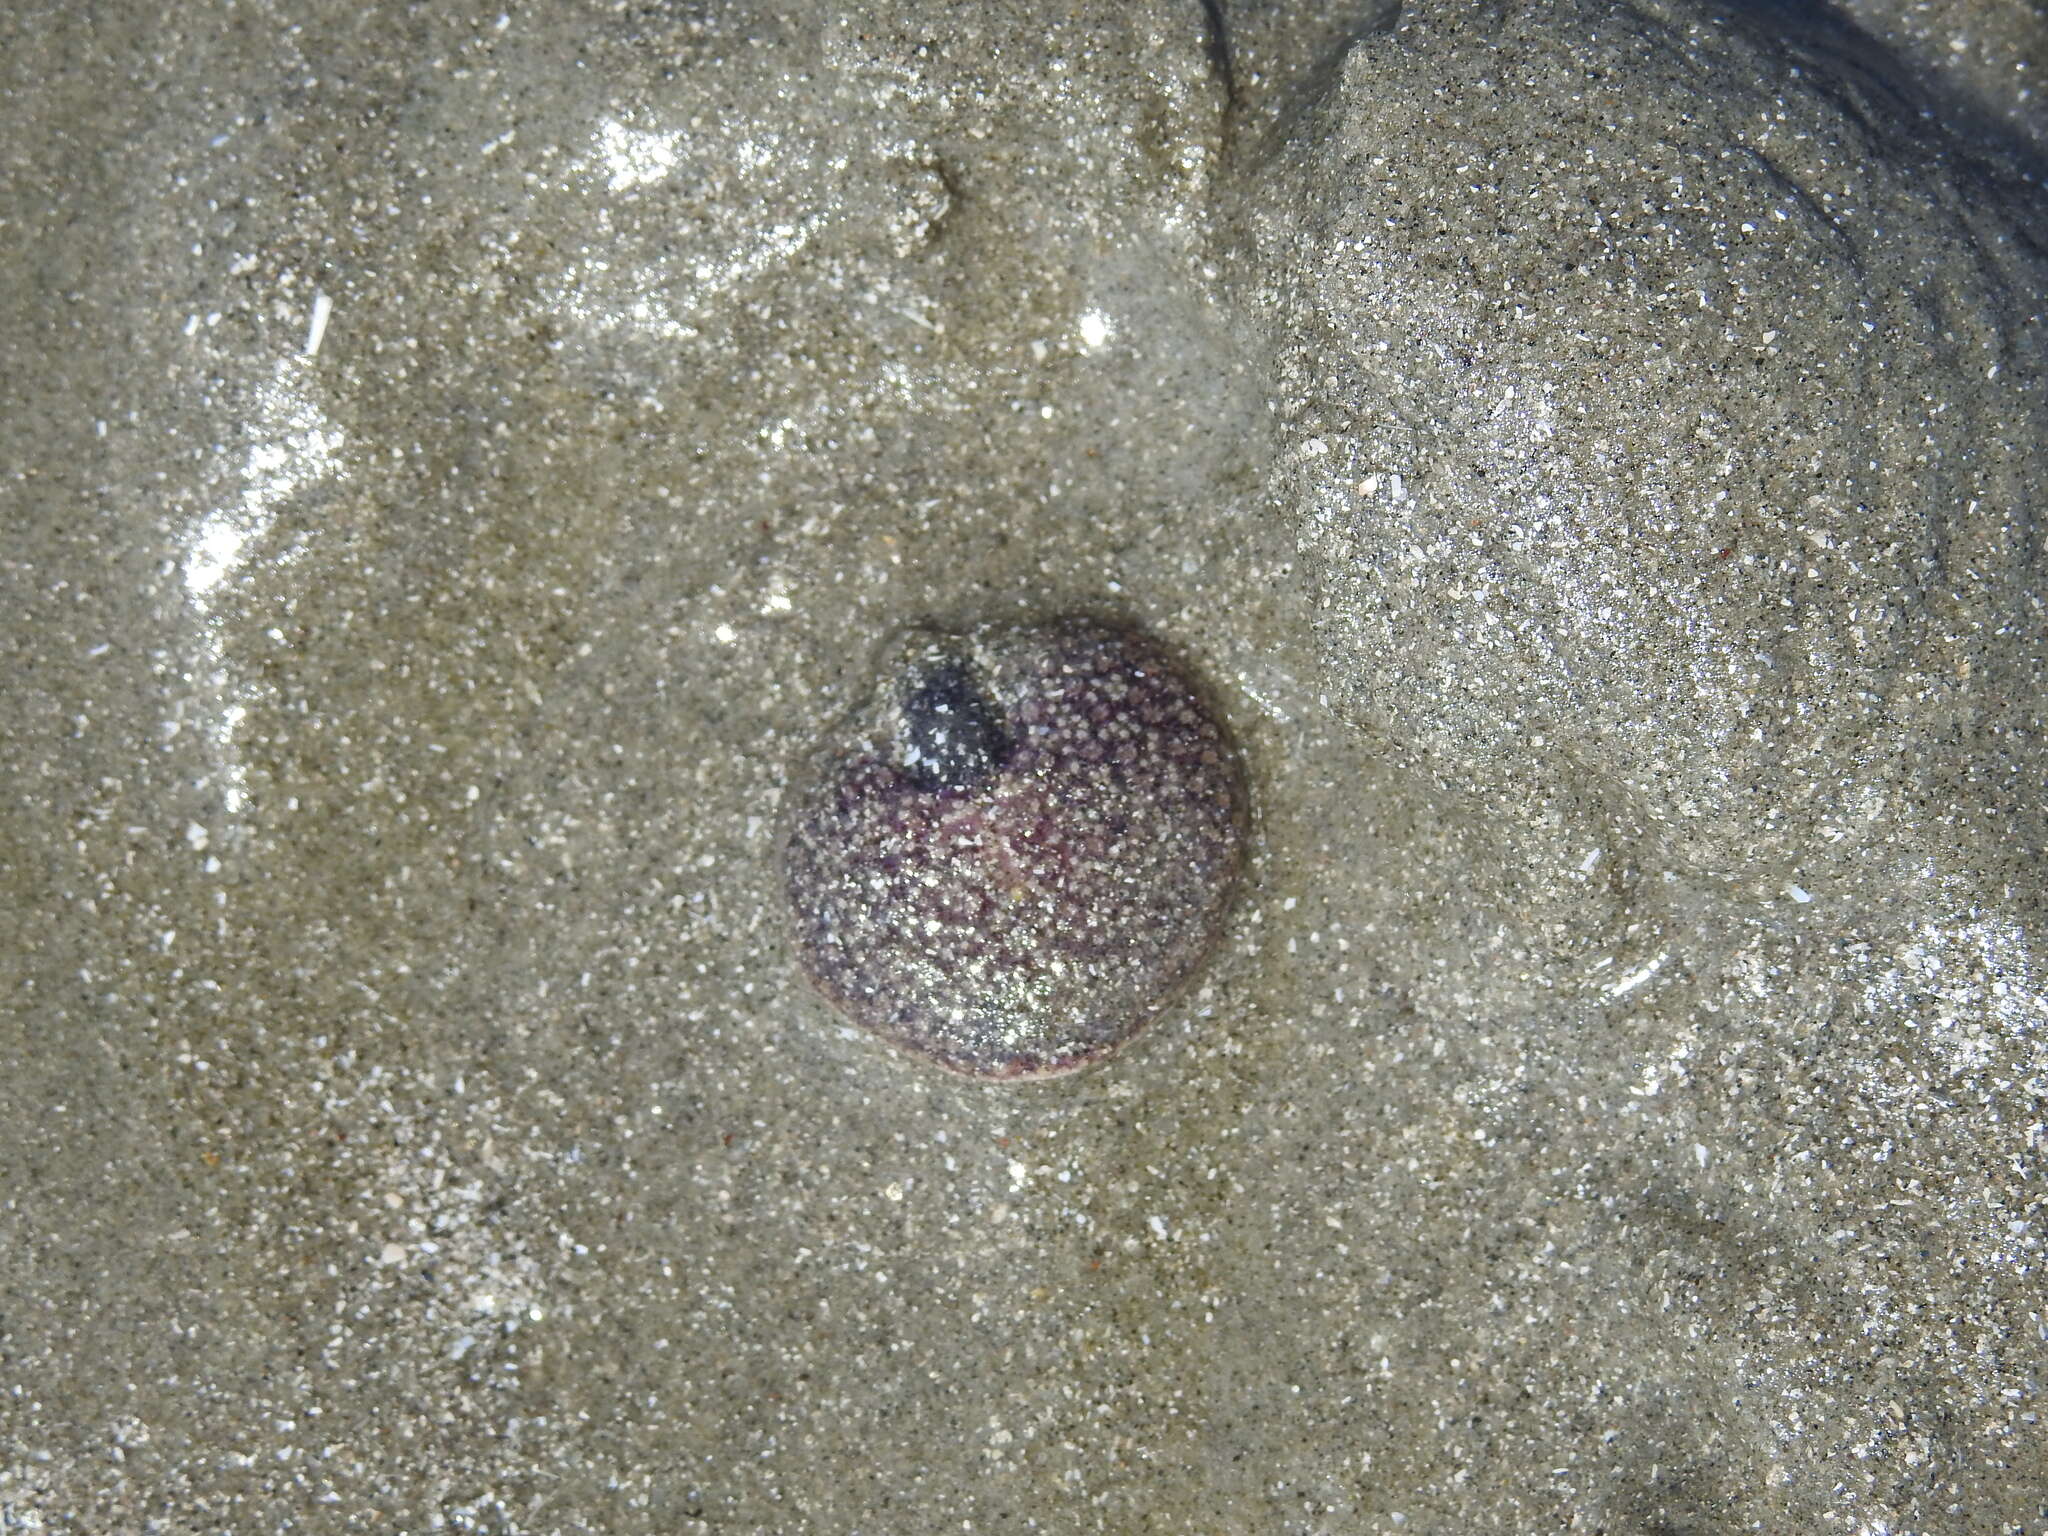 Image of sea pansy